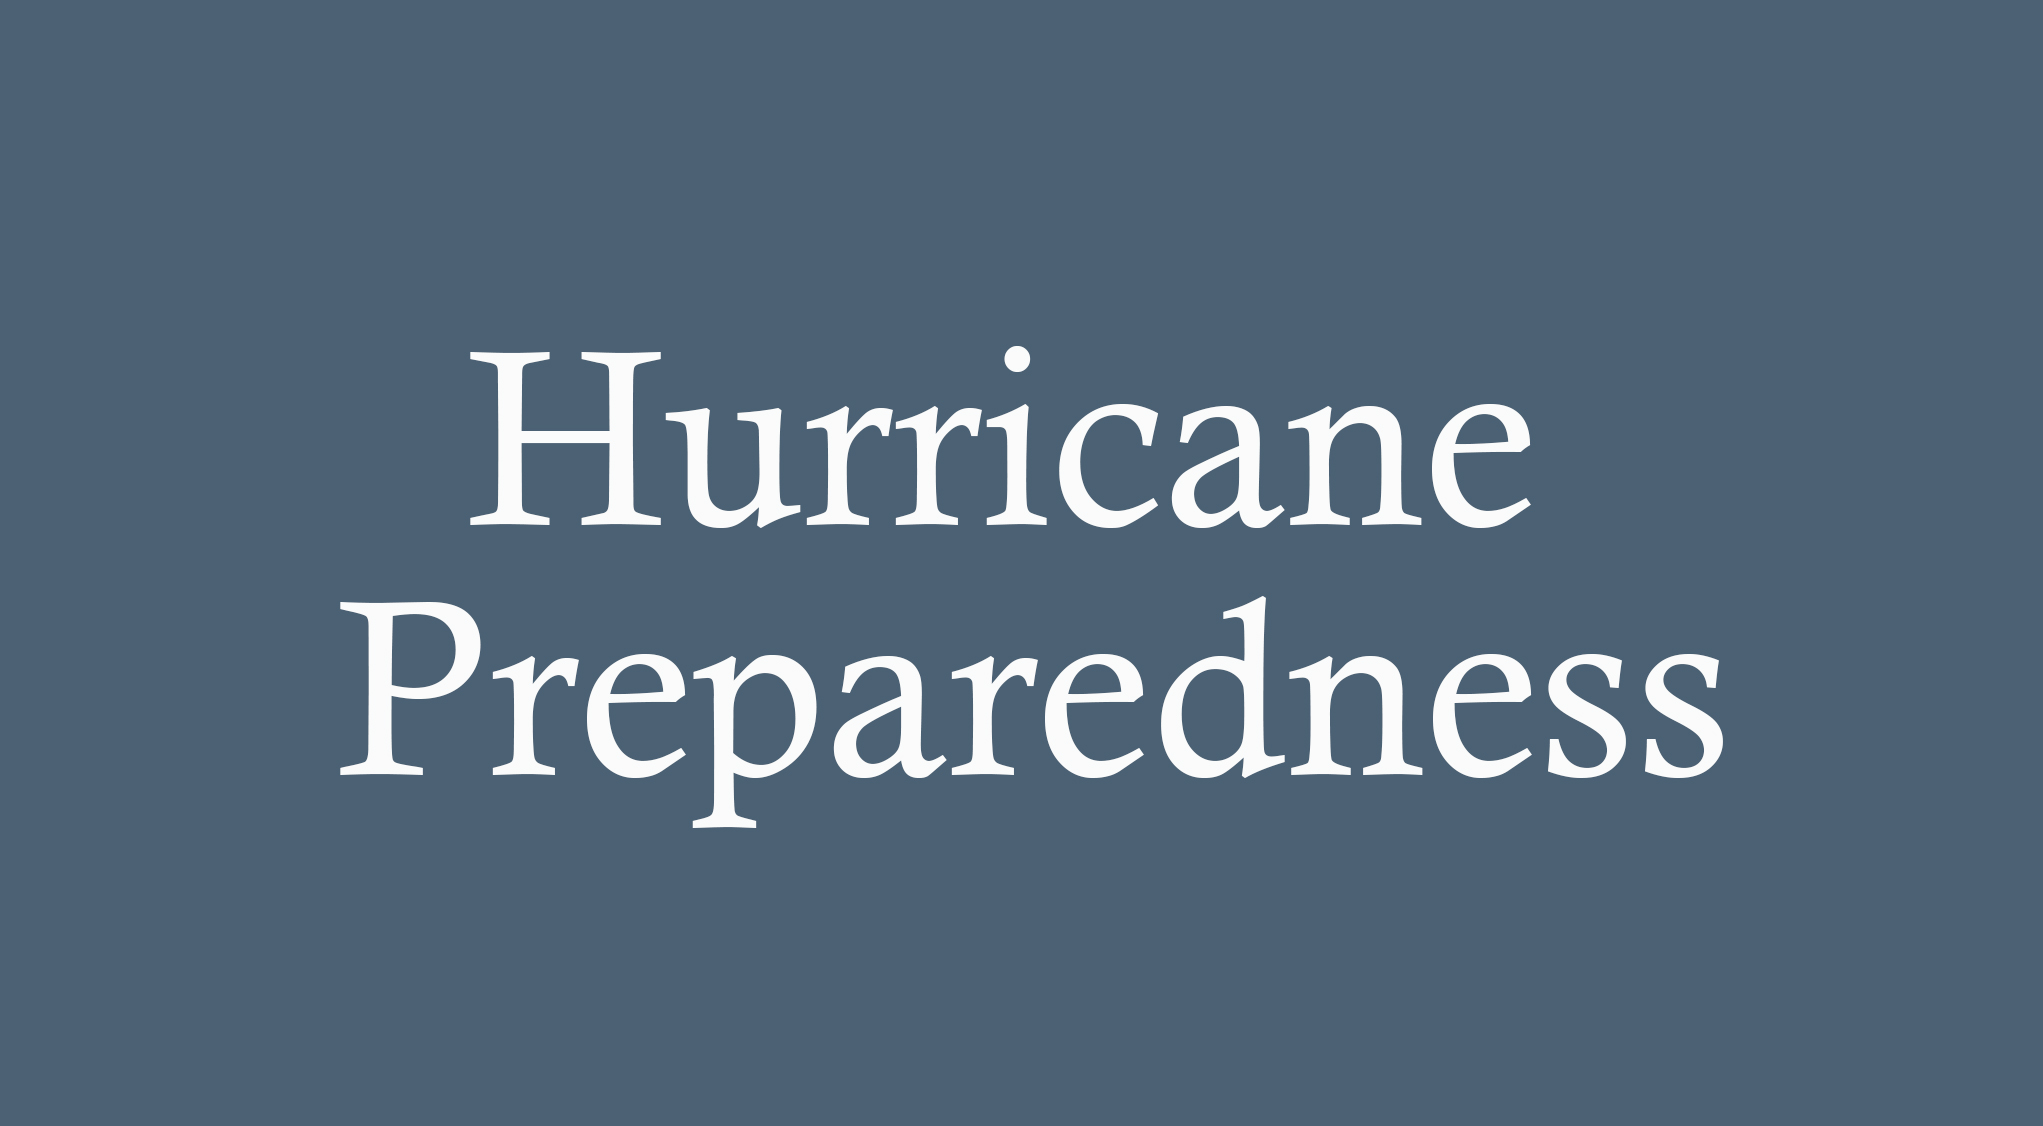 Jewish agencies provide hurricane preparedness assistance